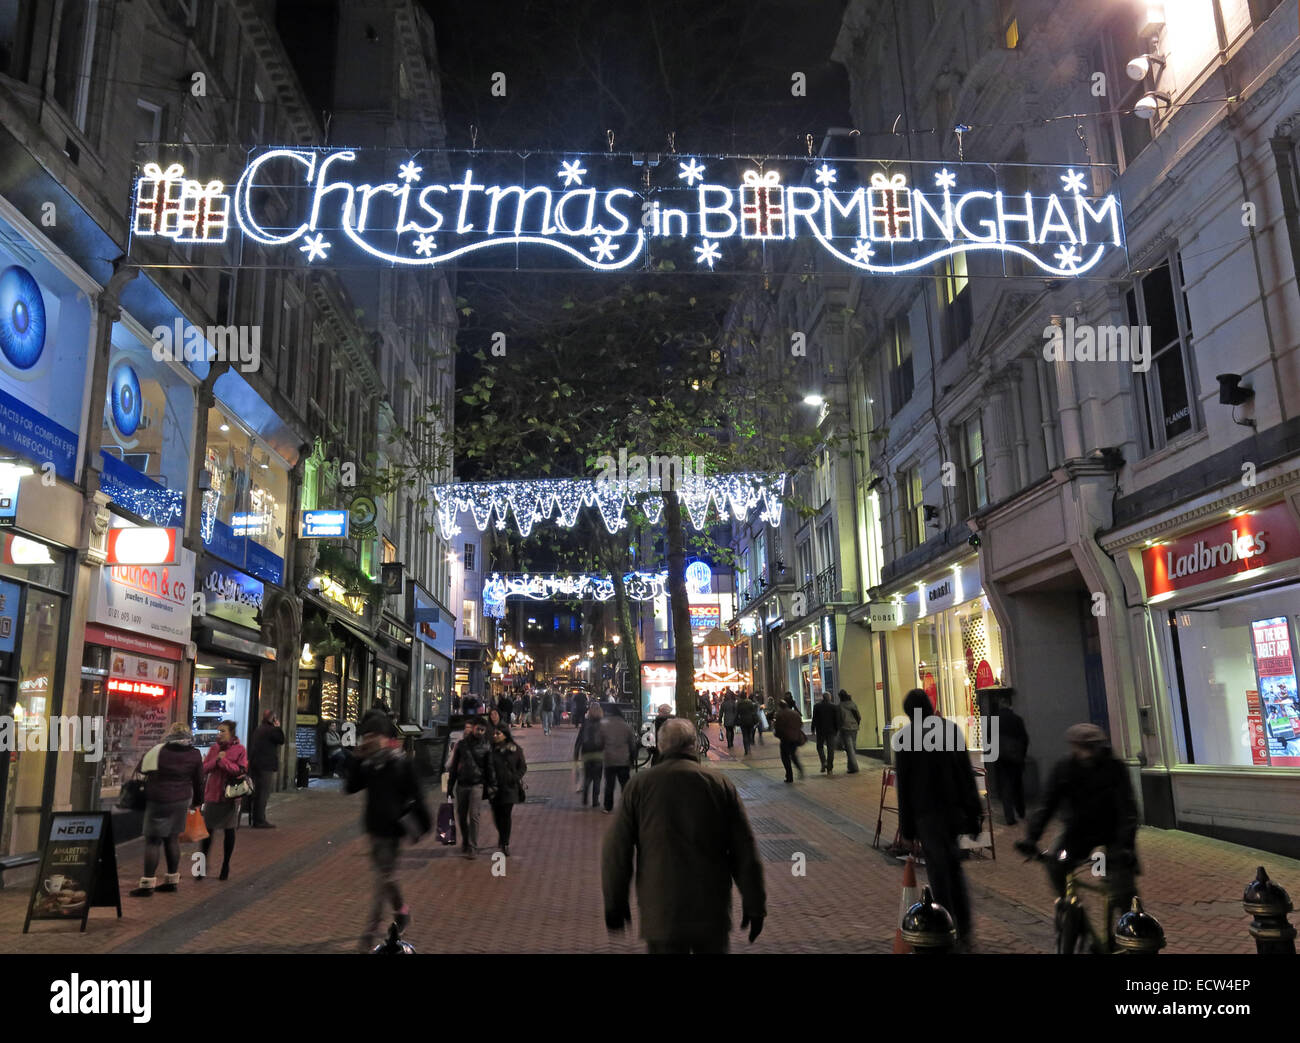 Weihnachtsbeleuchtung In Birmingham, West Midlands, England, UK Stockfoto